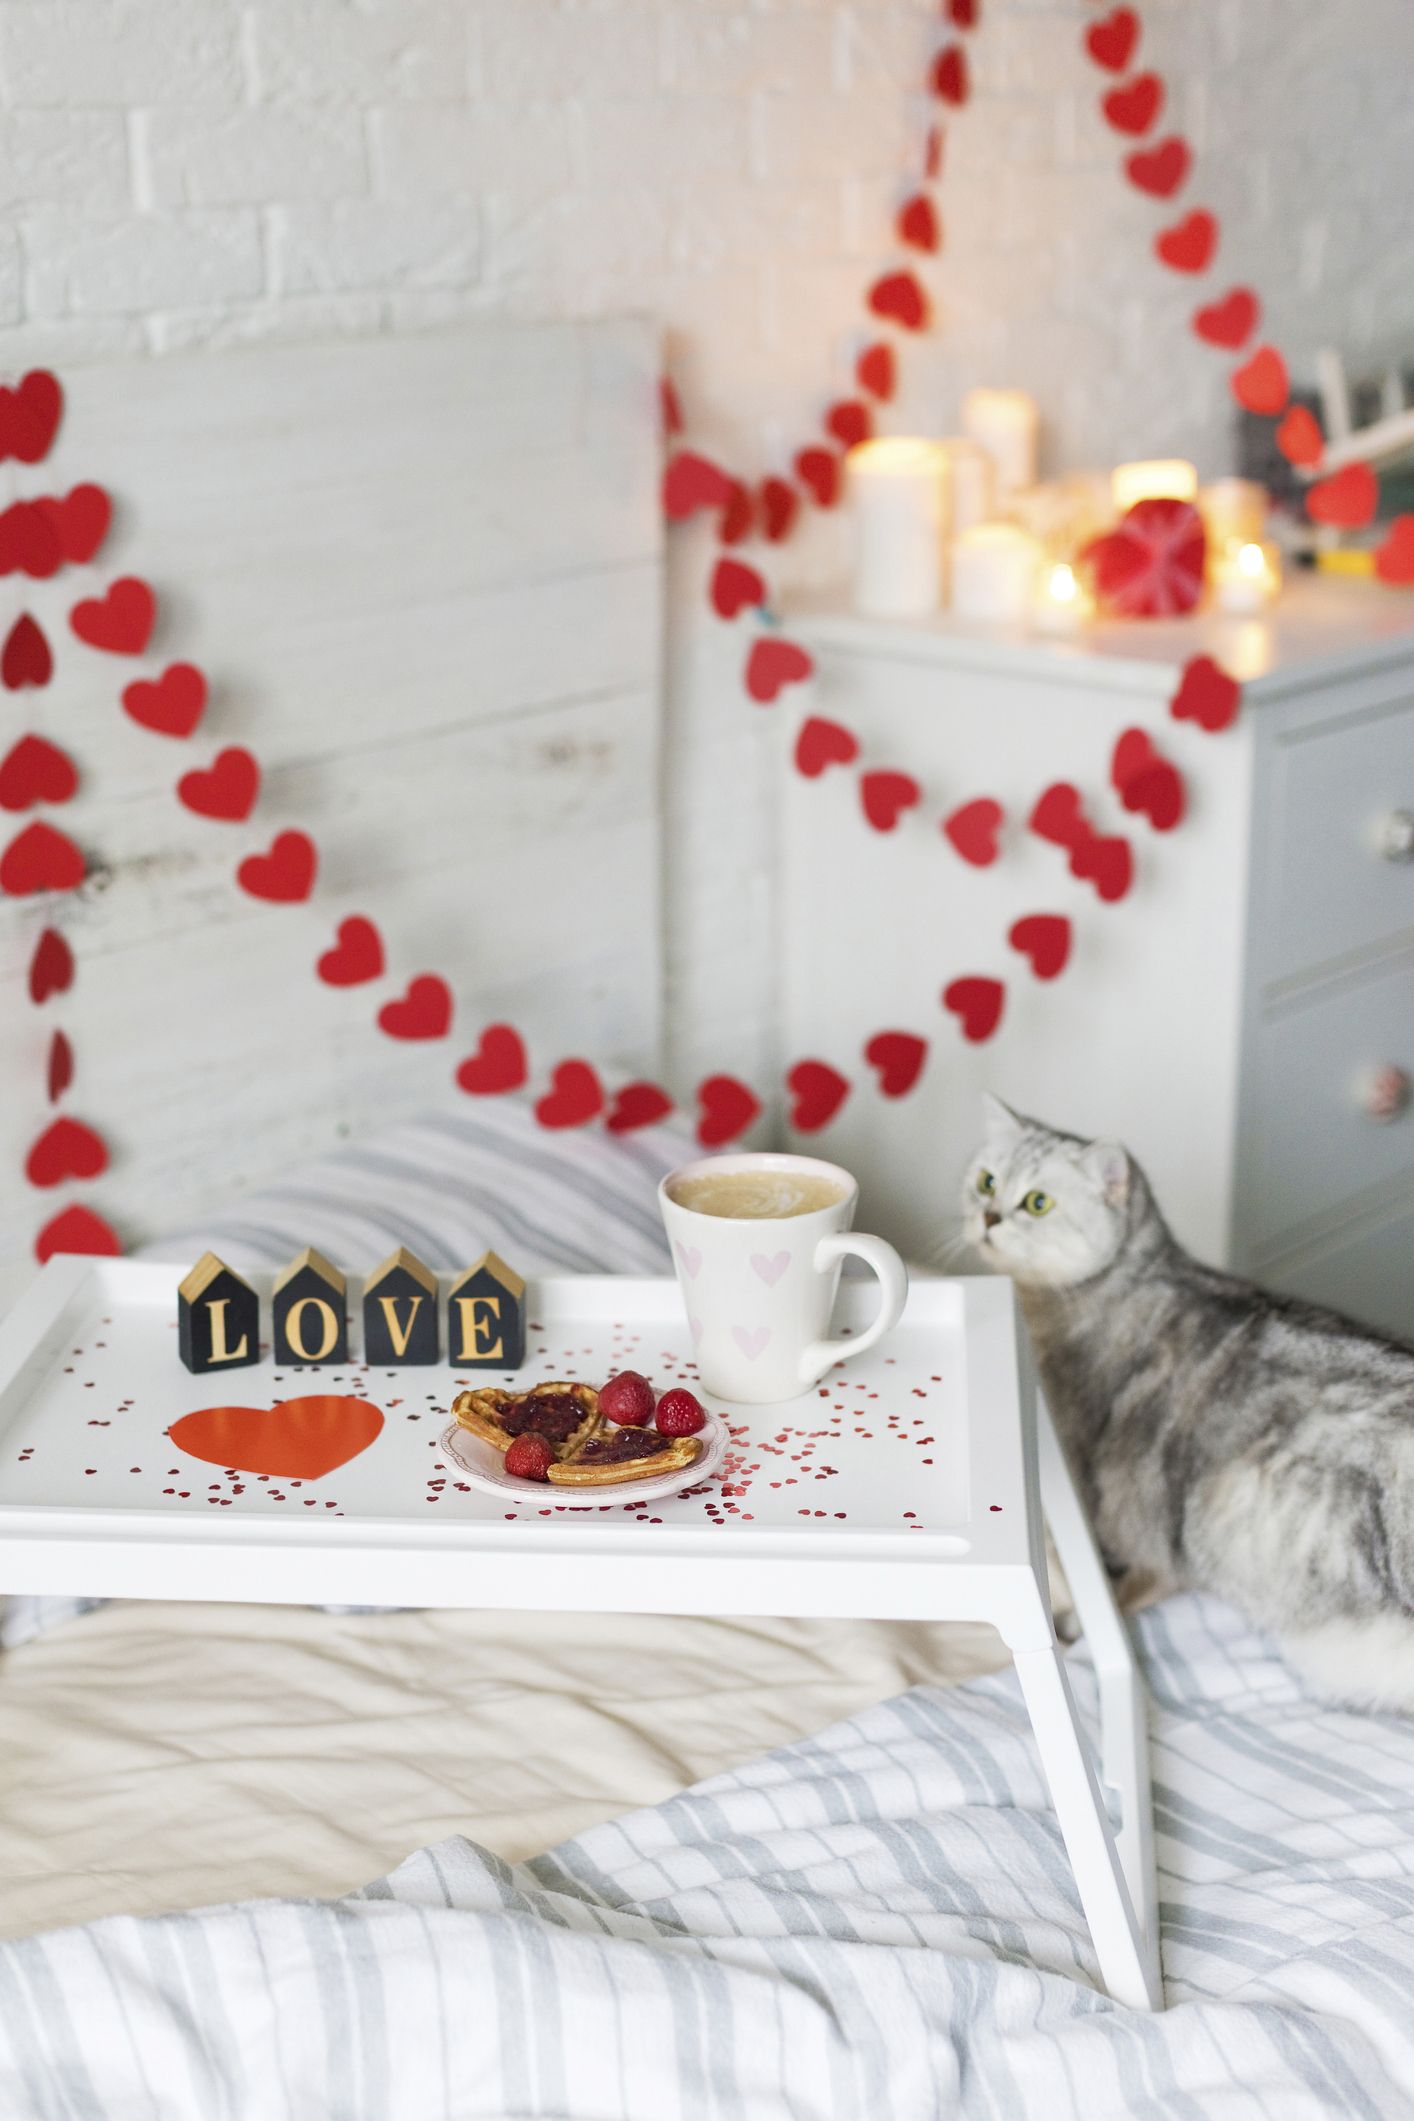 Free Valentine's Day Digital Stickers! - Shiny Tiny Love Creative